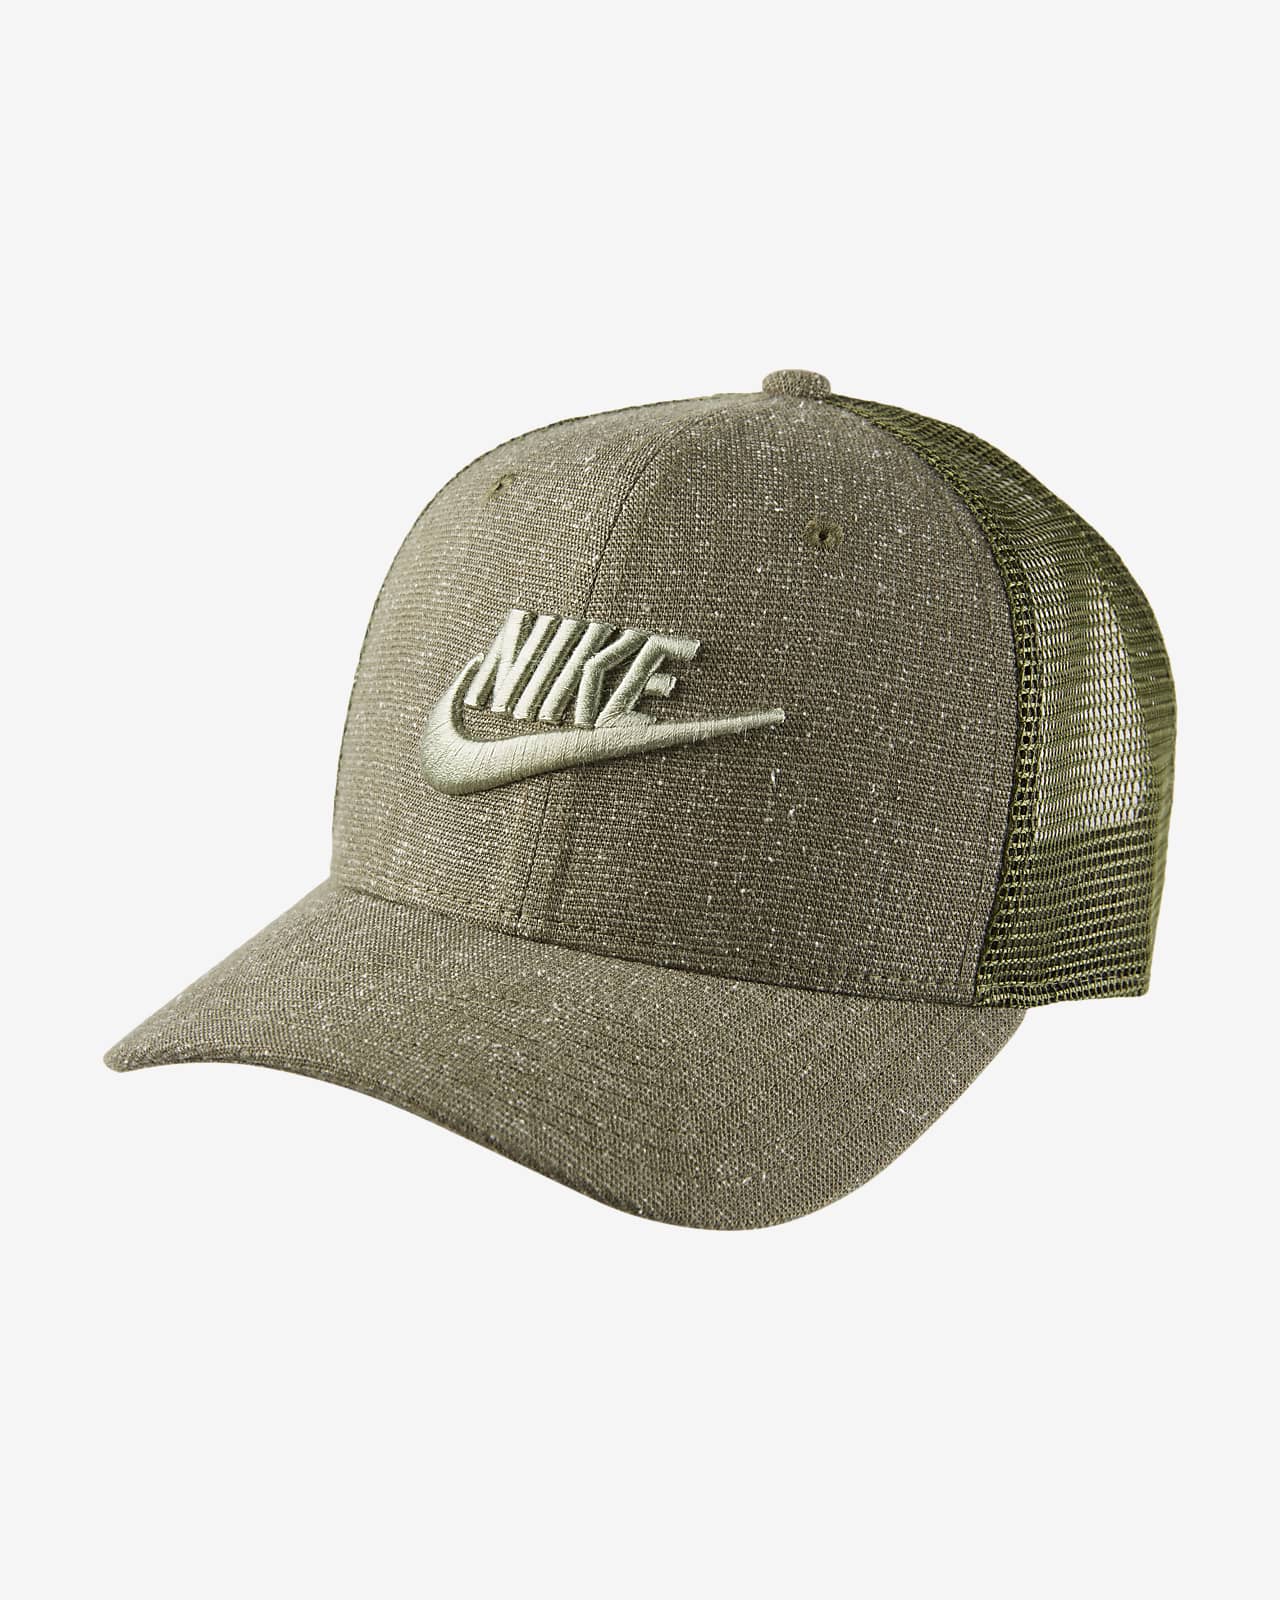 classic 99 trucker hat